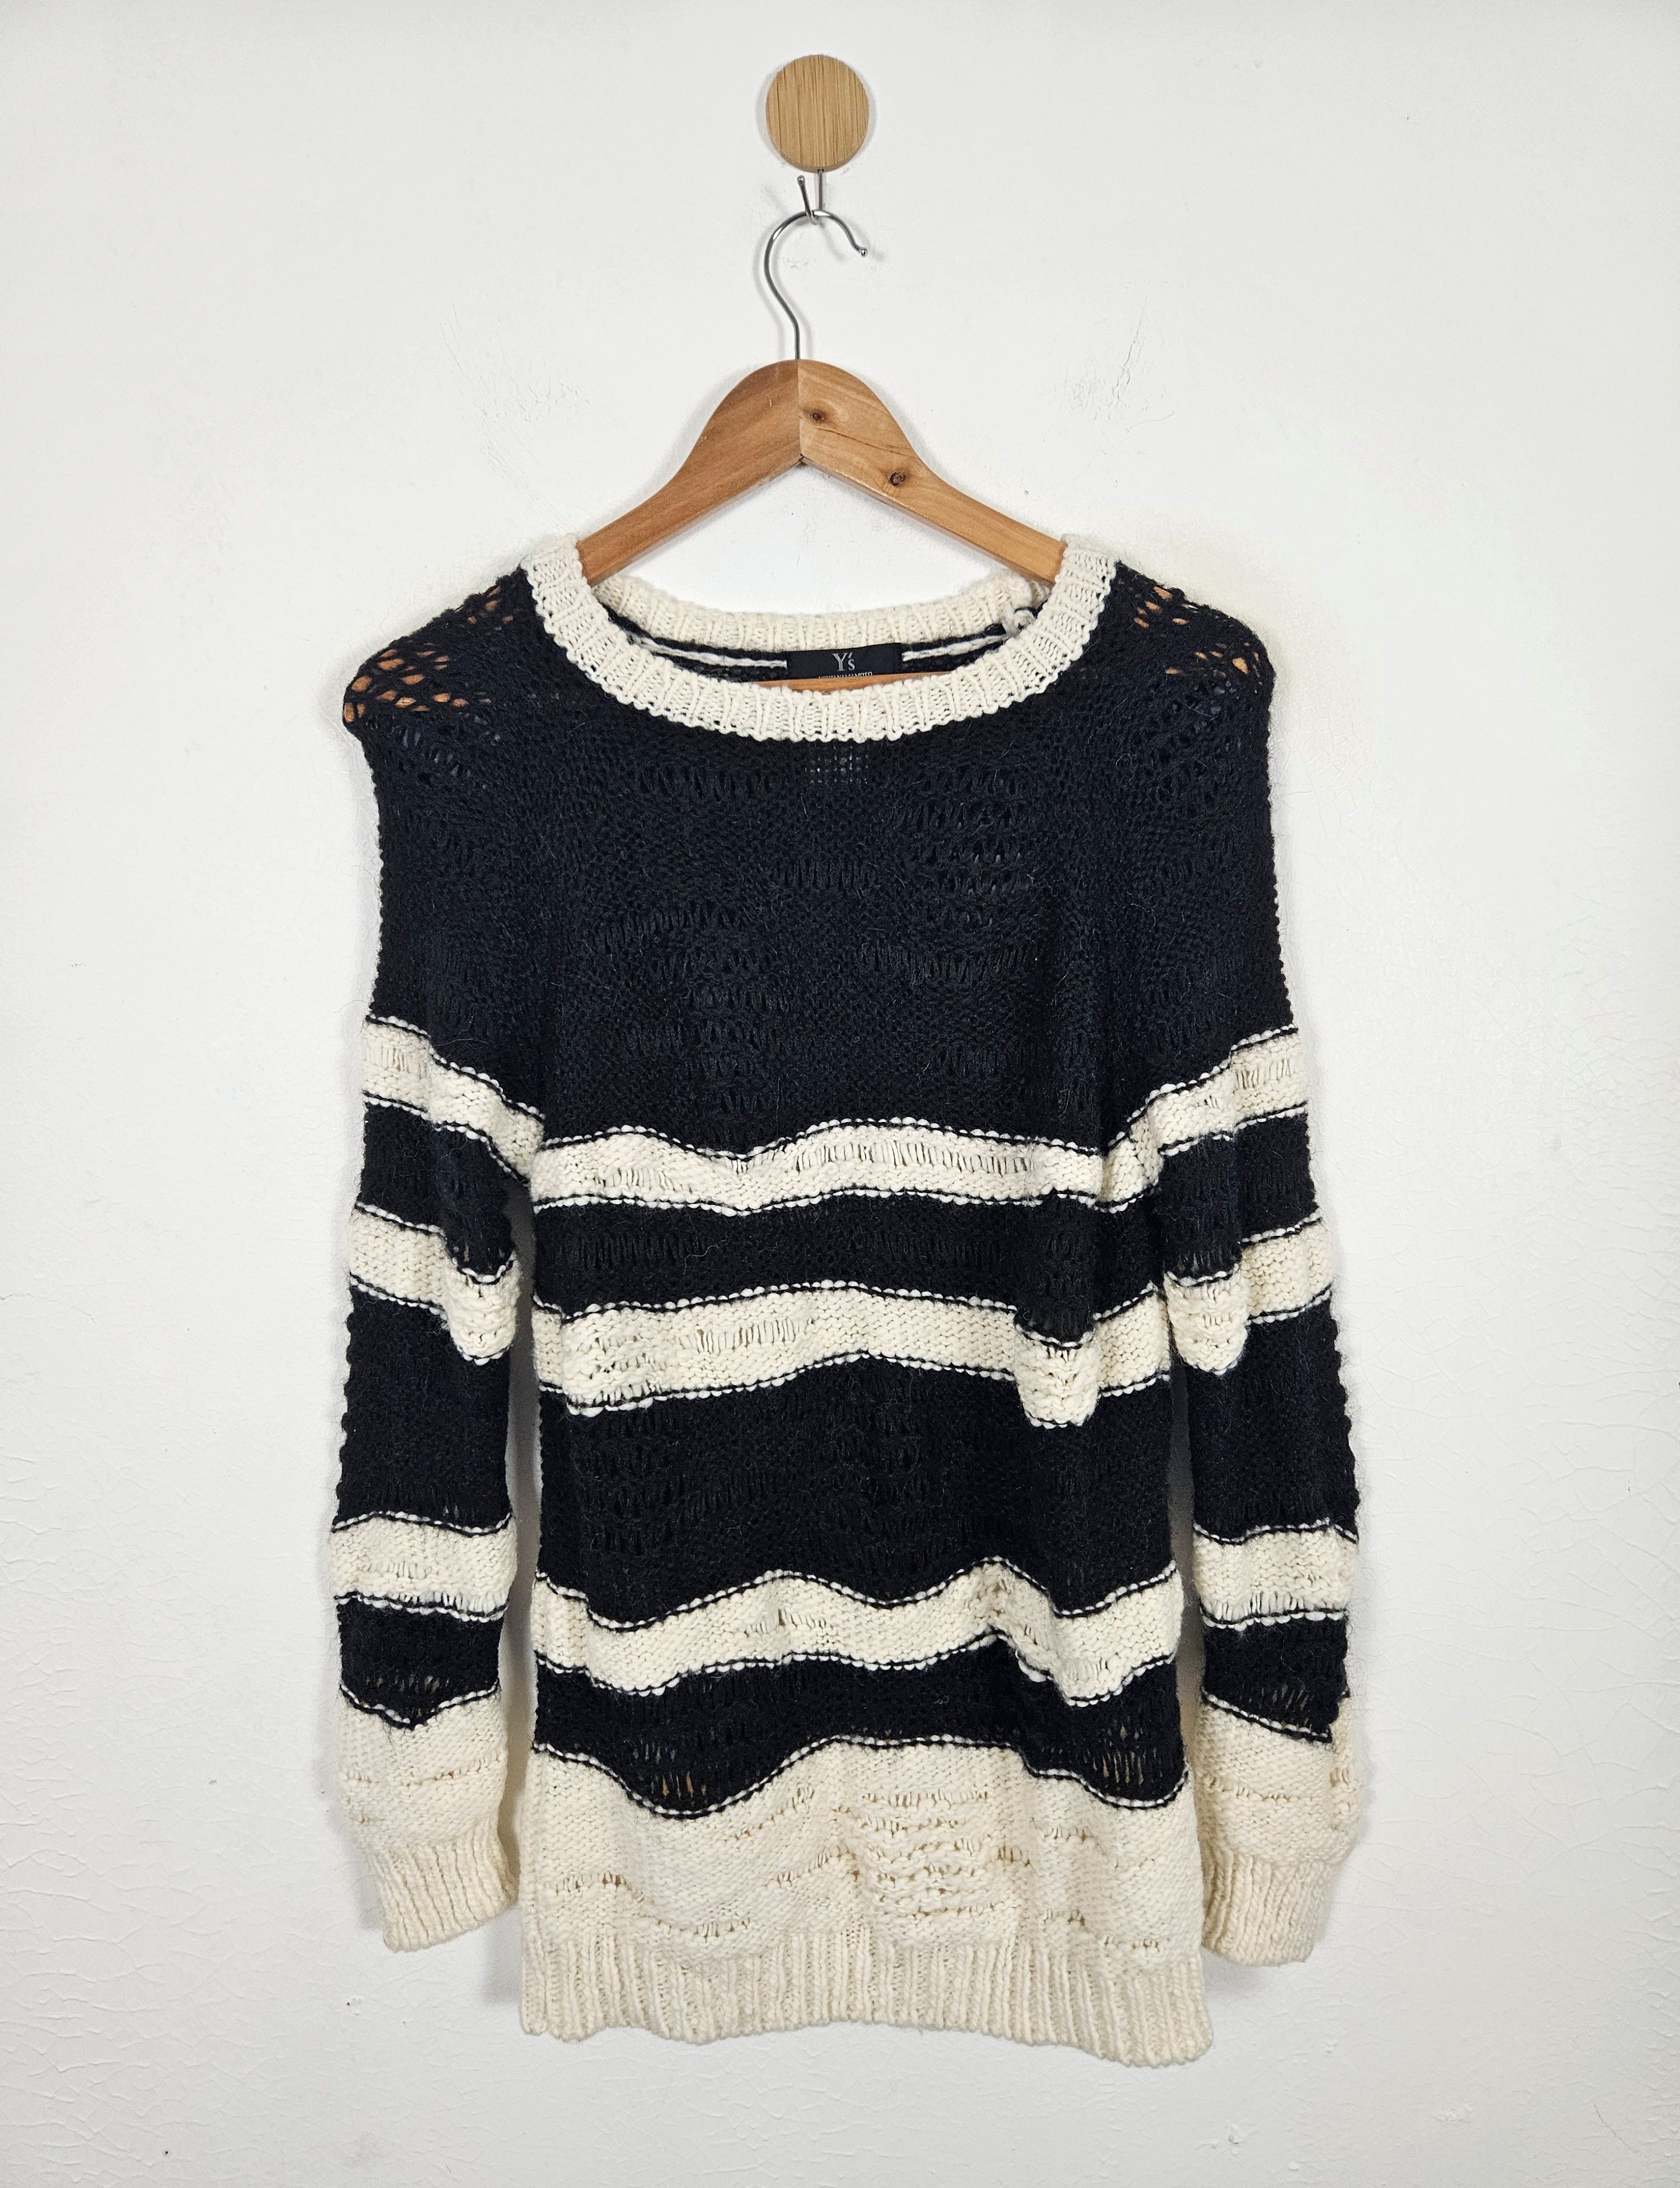 Yohji Yamamoto Y's for Men Knit Sweatshirt - 1